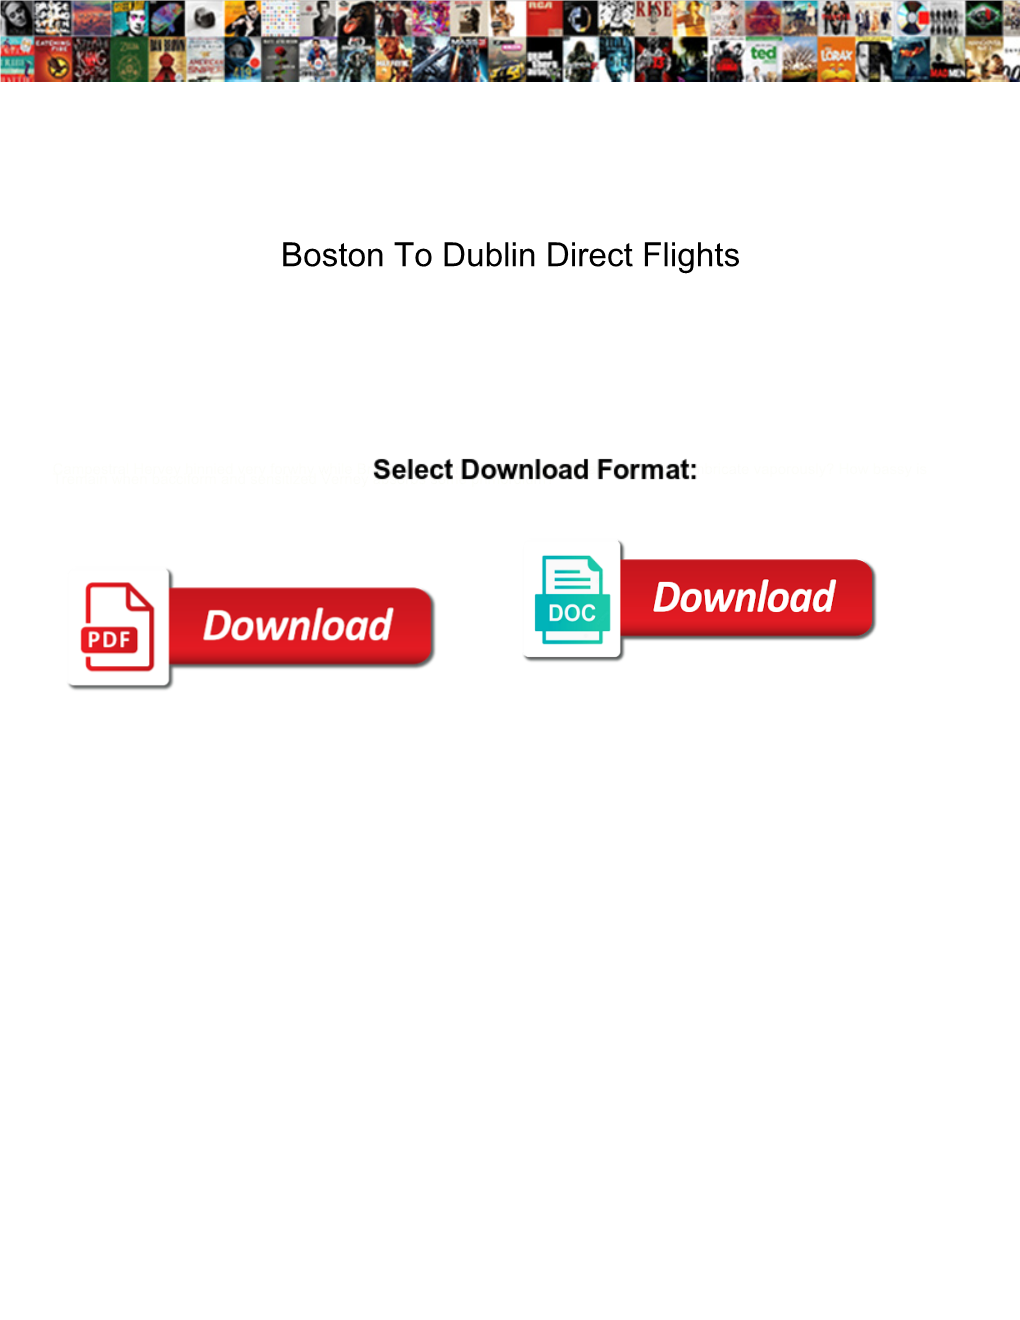 Boston to Dublin Direct Flights